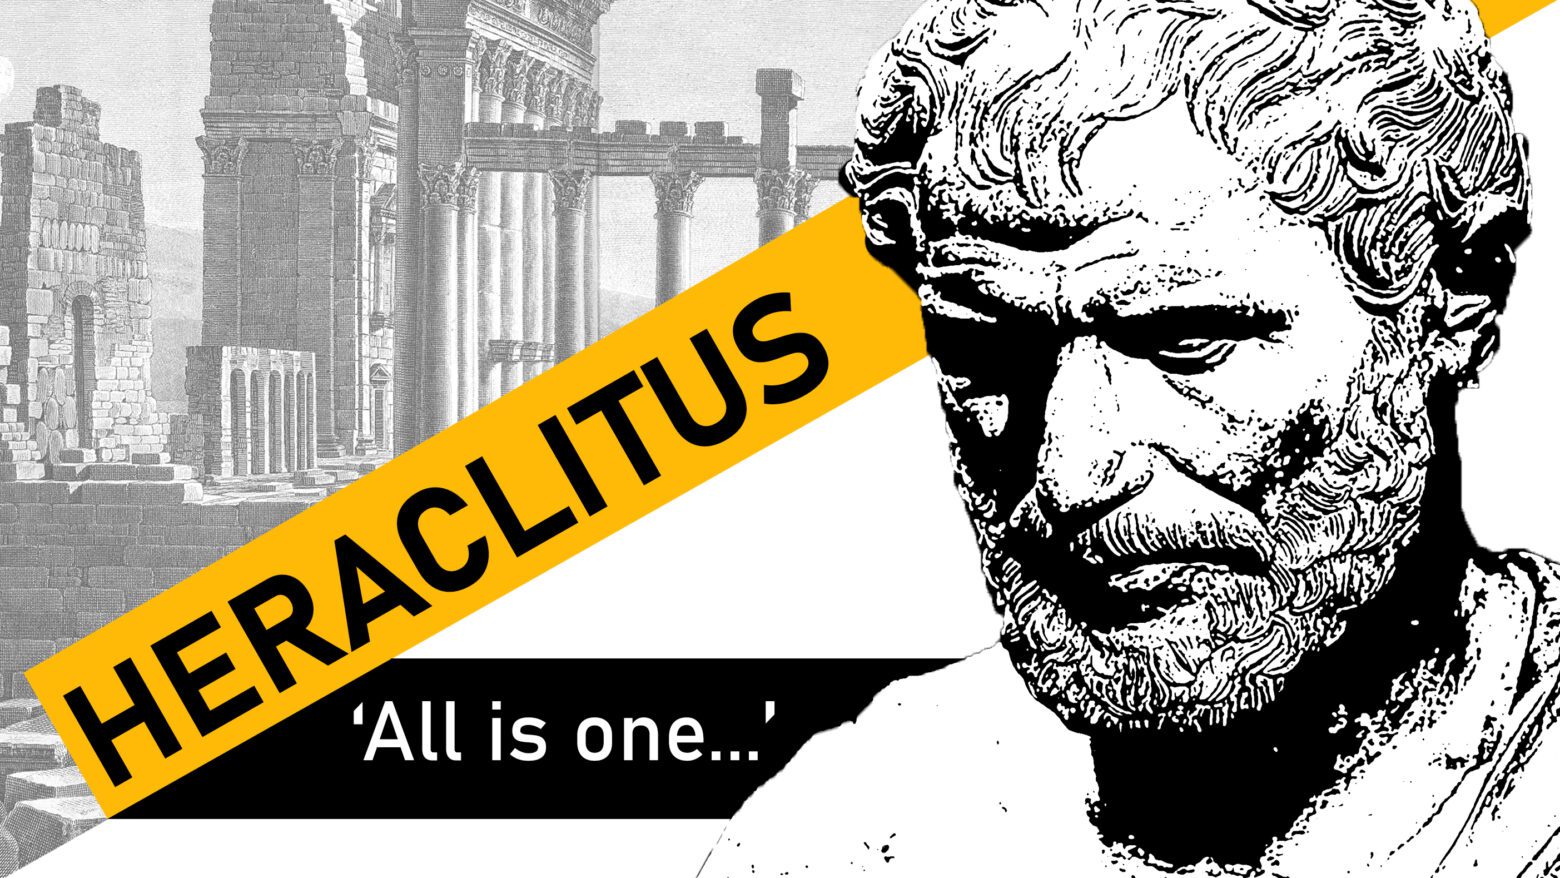 Heraclitus: Union of Opposites, Change & Logos